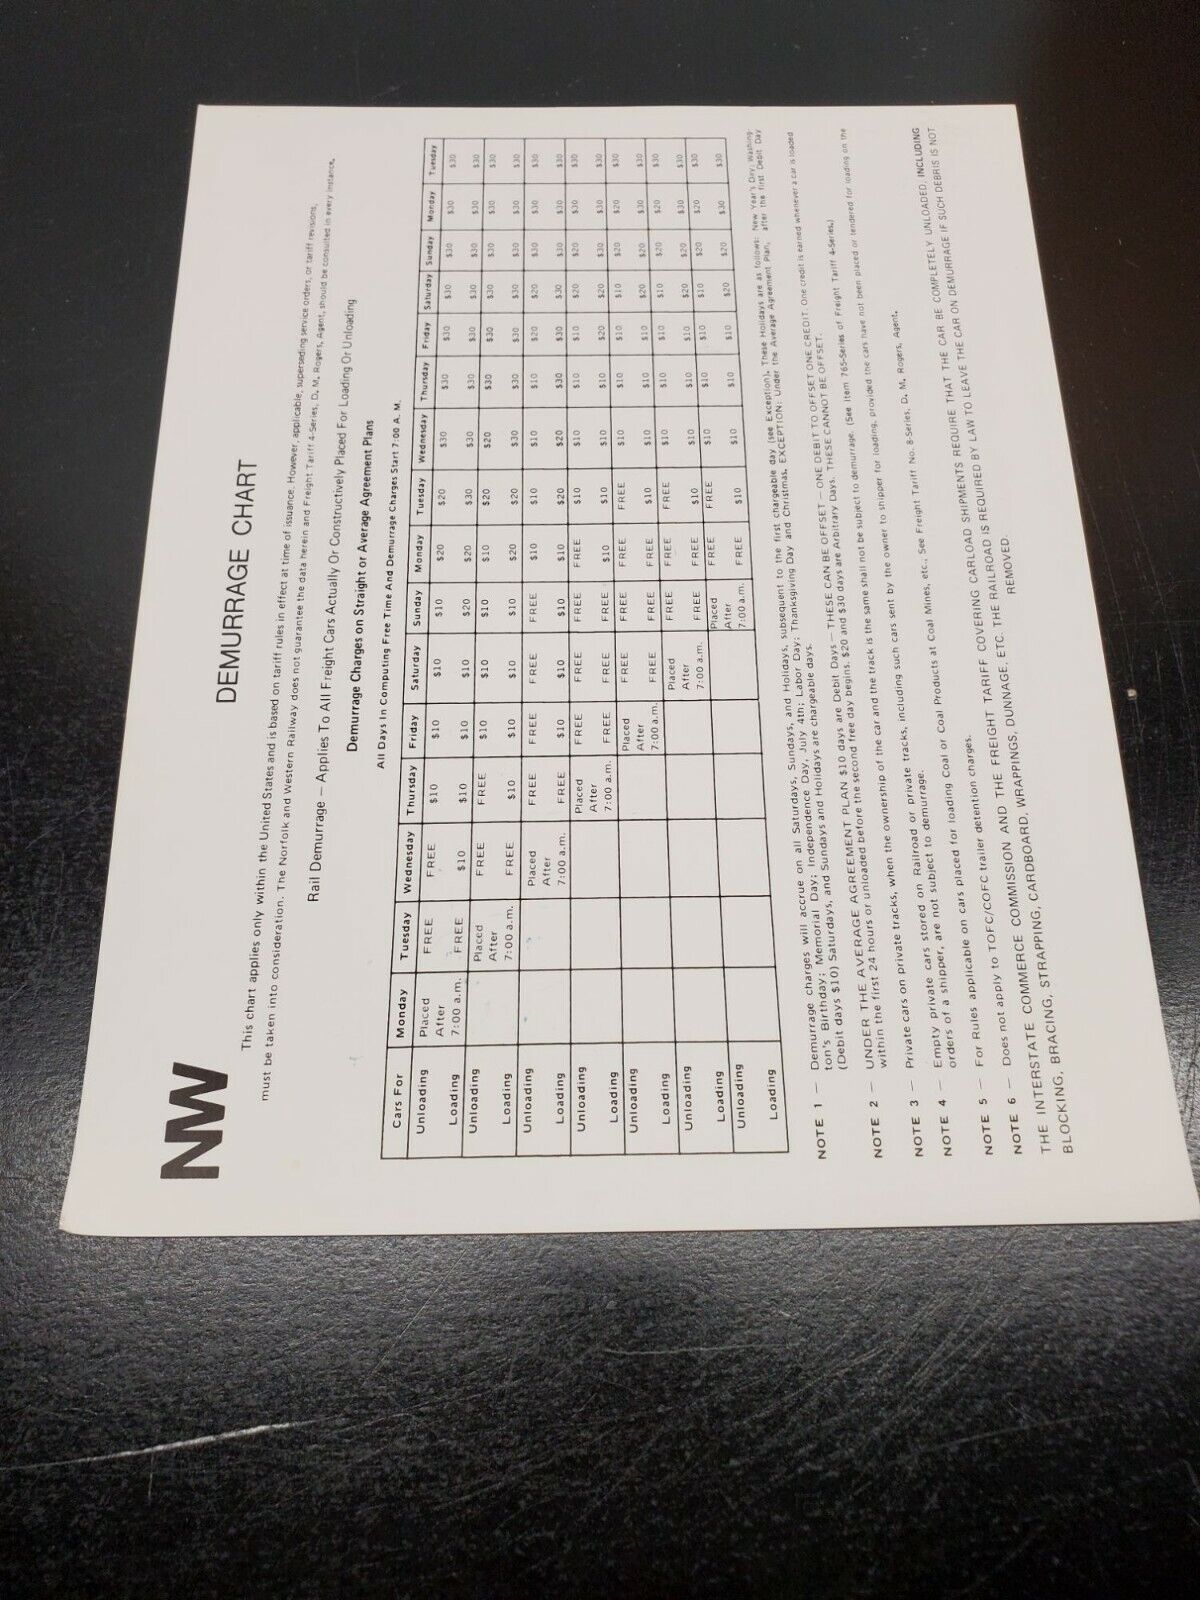 Norfolk & Western Railroad Demurrage Chart and 1979 Calendar